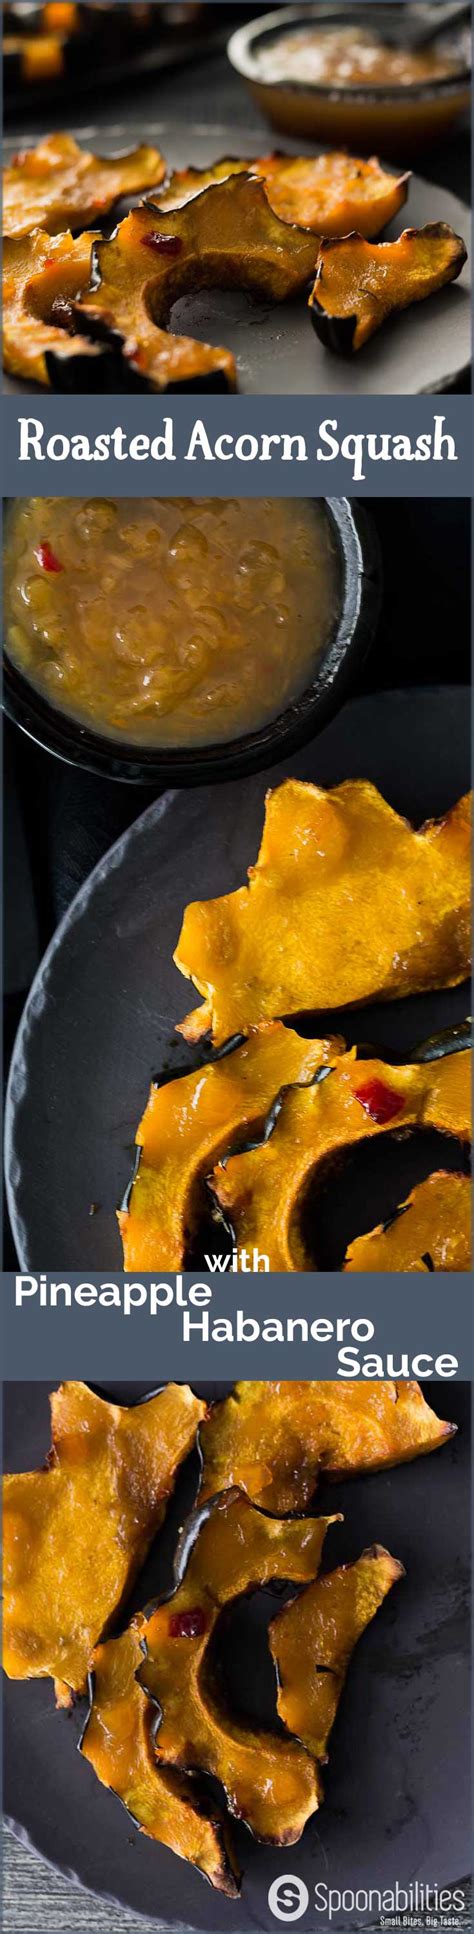 Roasted Acorn Squash Slices Recipe With Pineapple Habanero